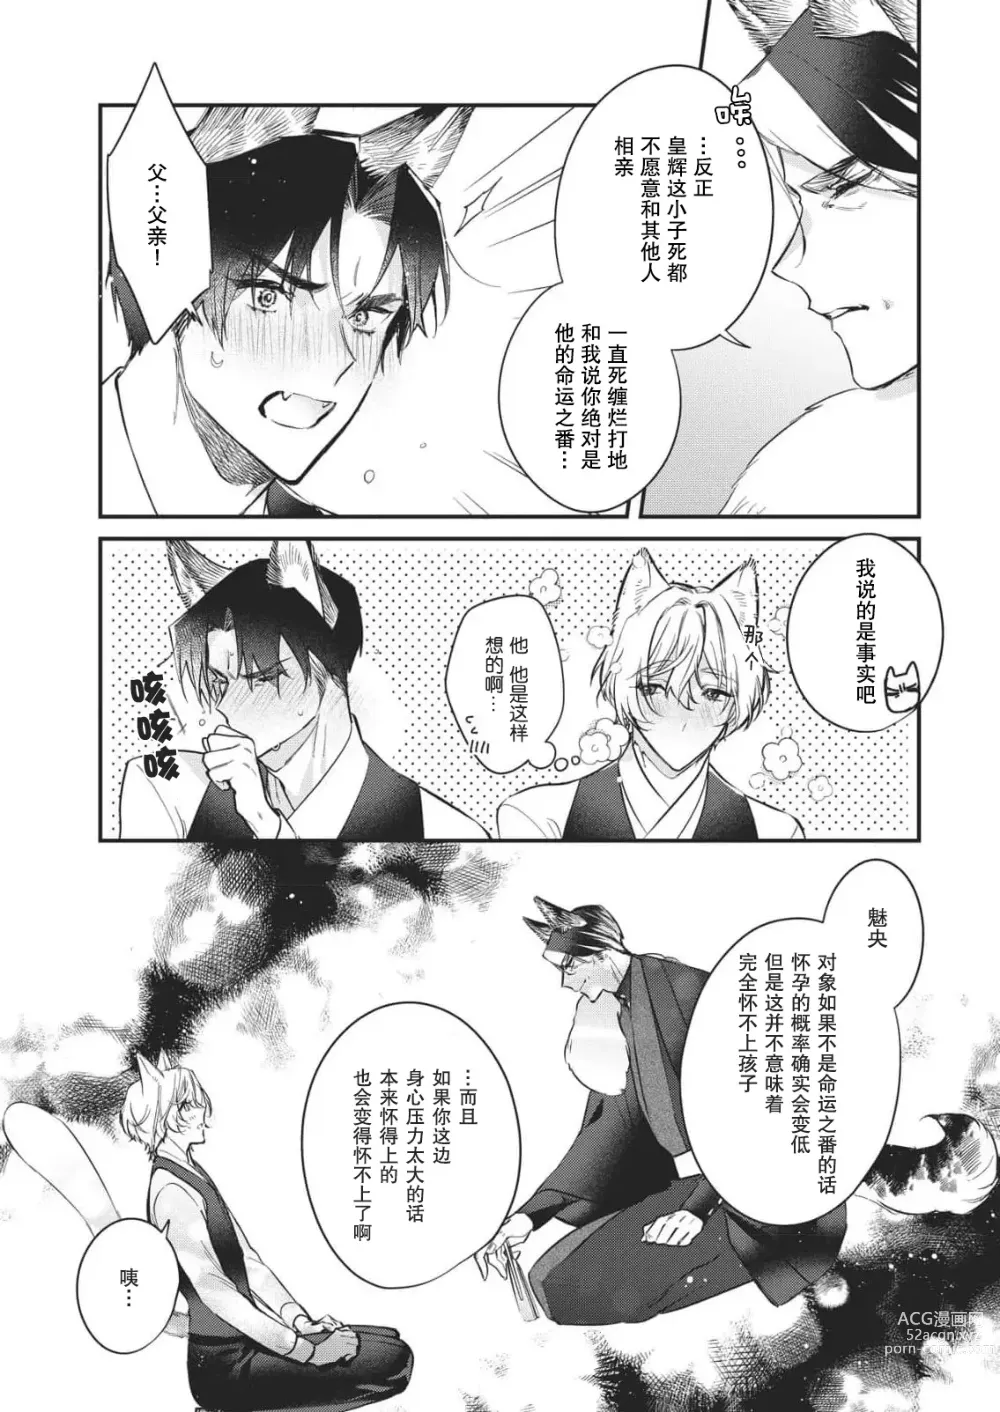 Page 167 of manga 无可奈何花落去 只叹道，命运使然 1-7 end